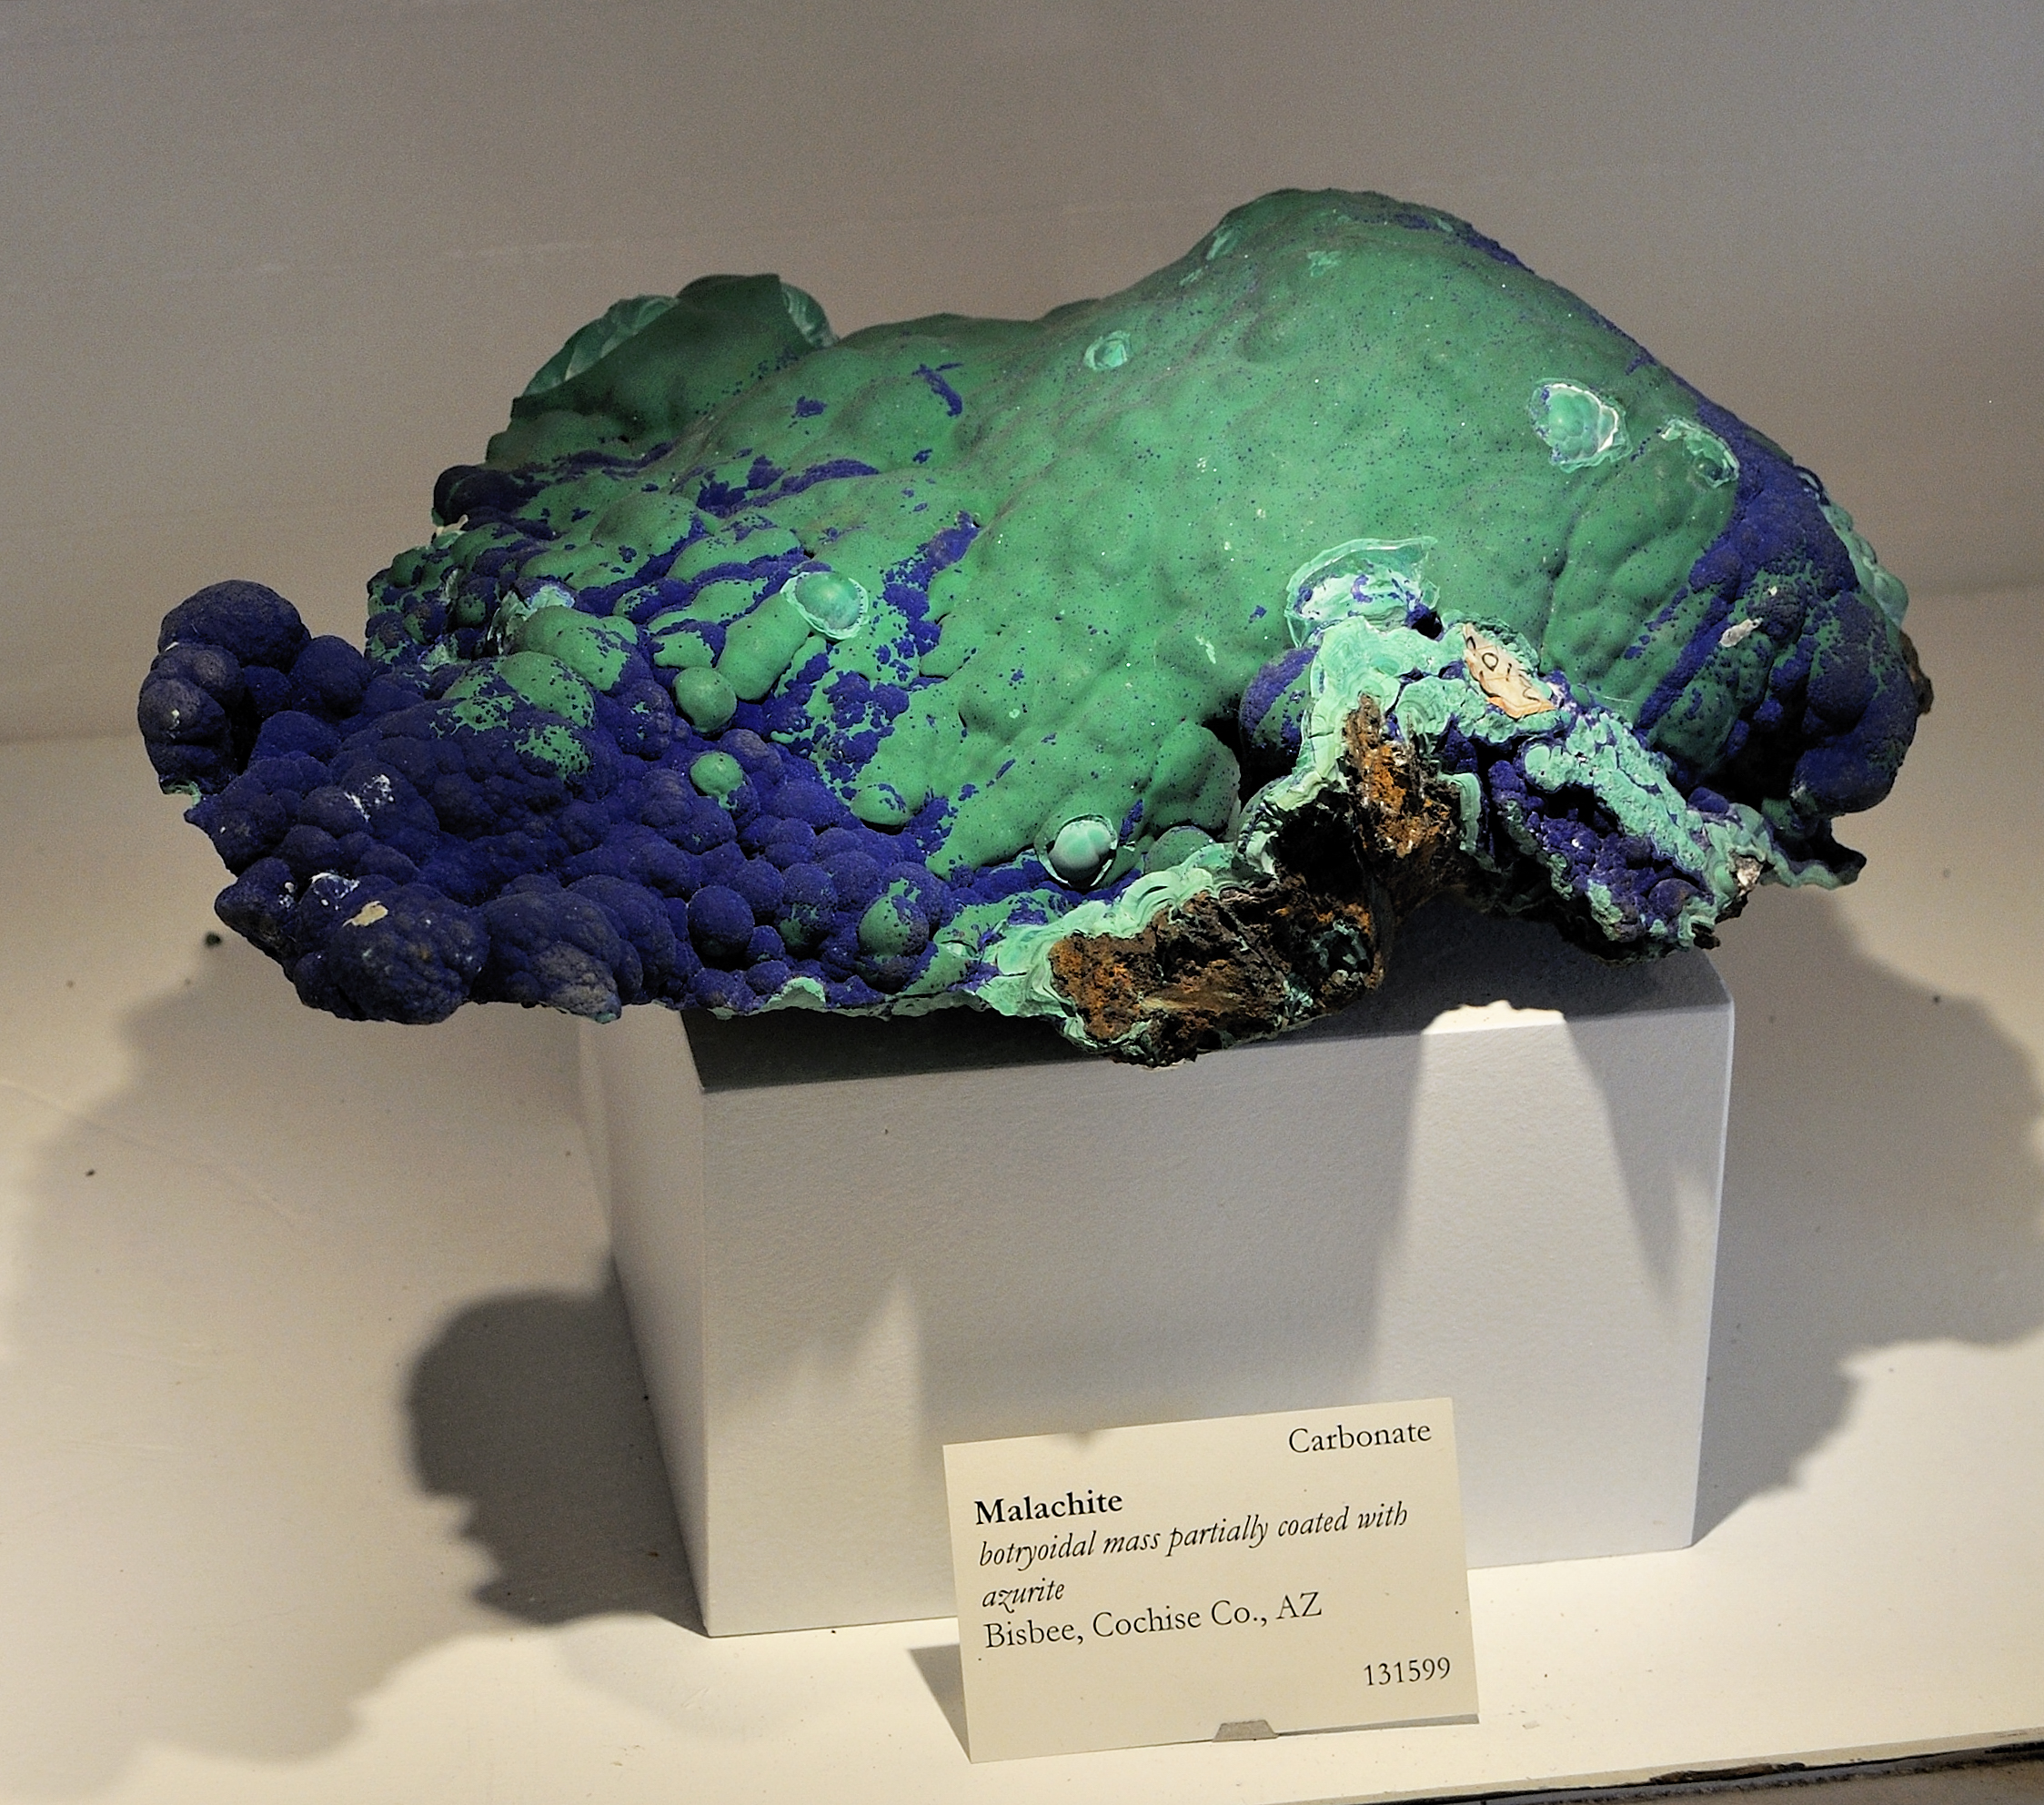 Harvard Museum of Natural History. Malachite. Bisbee, Cochise Co., AZ (DerHexer) 2012-07-20